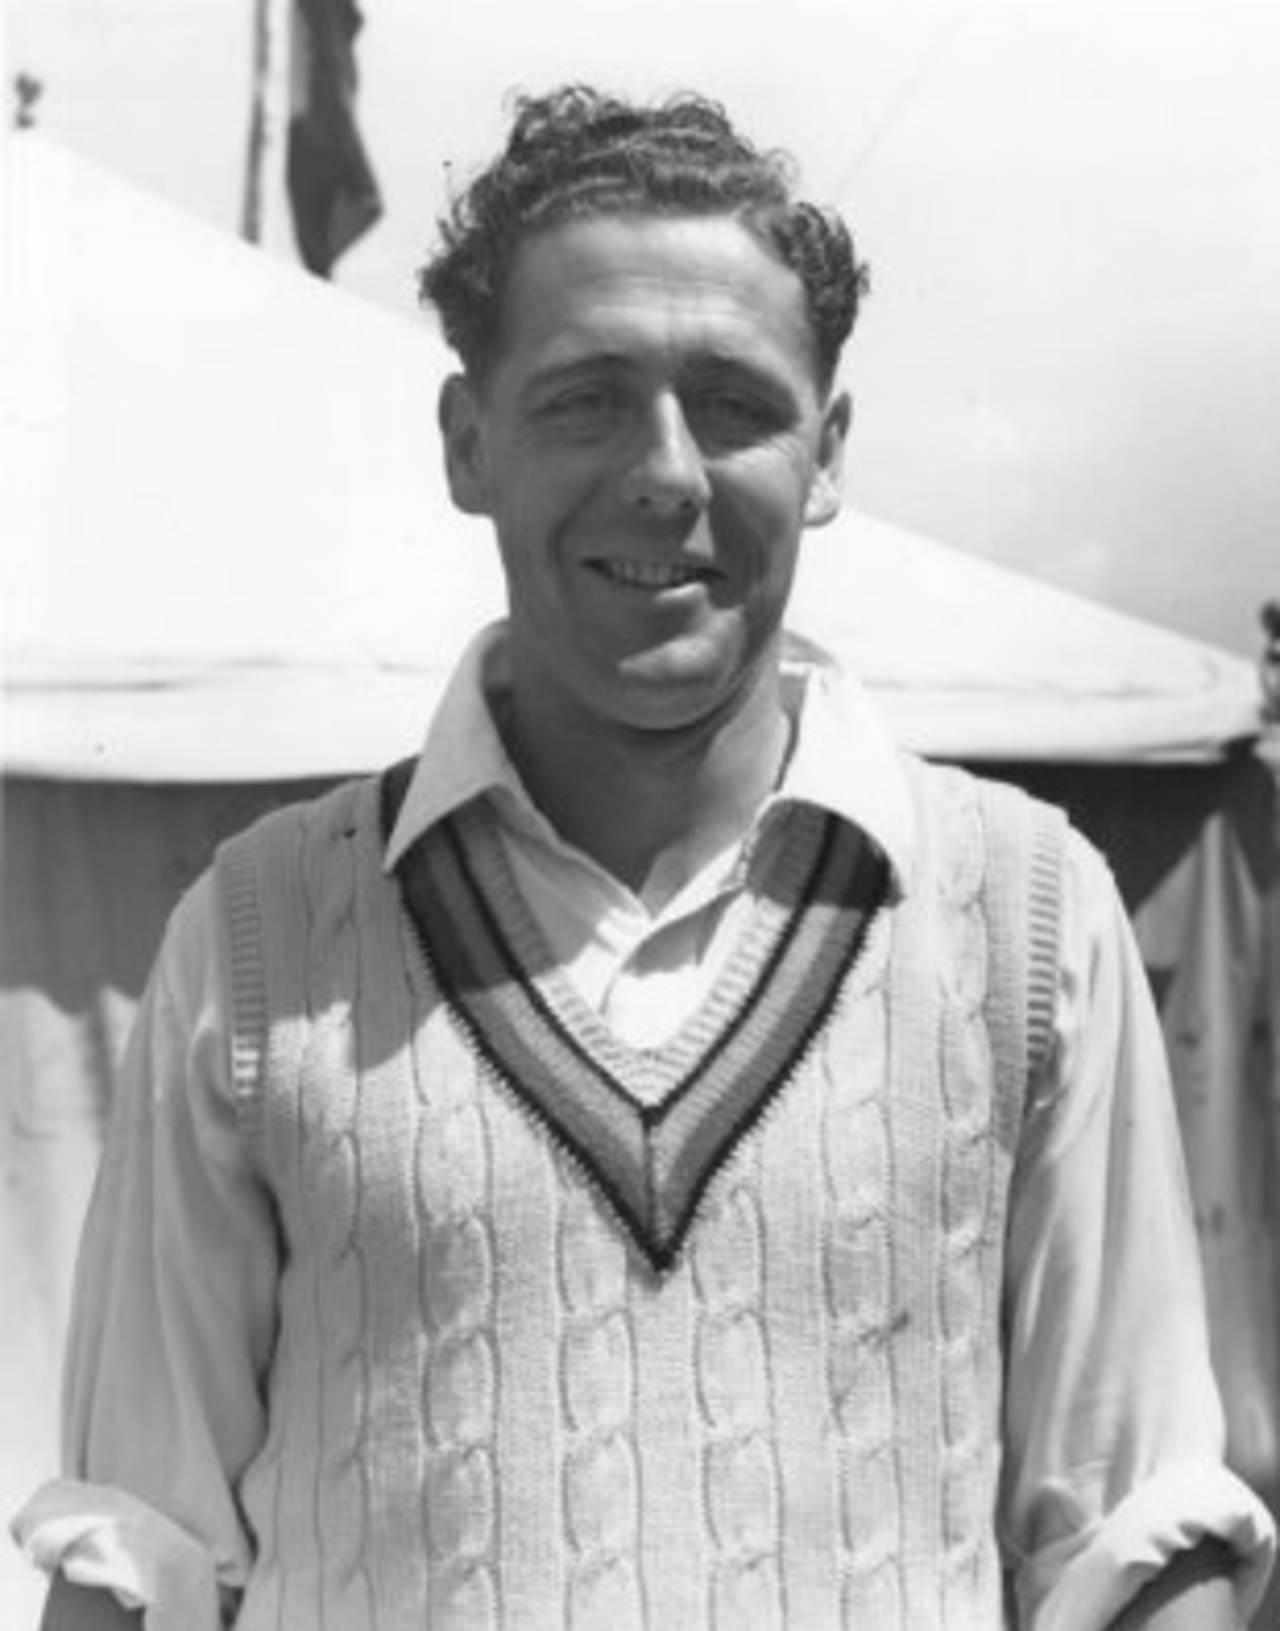 Trevor Bailey - 1923-2011&nbsp;&nbsp;&bull;&nbsp;&nbsp;The Cricketer International